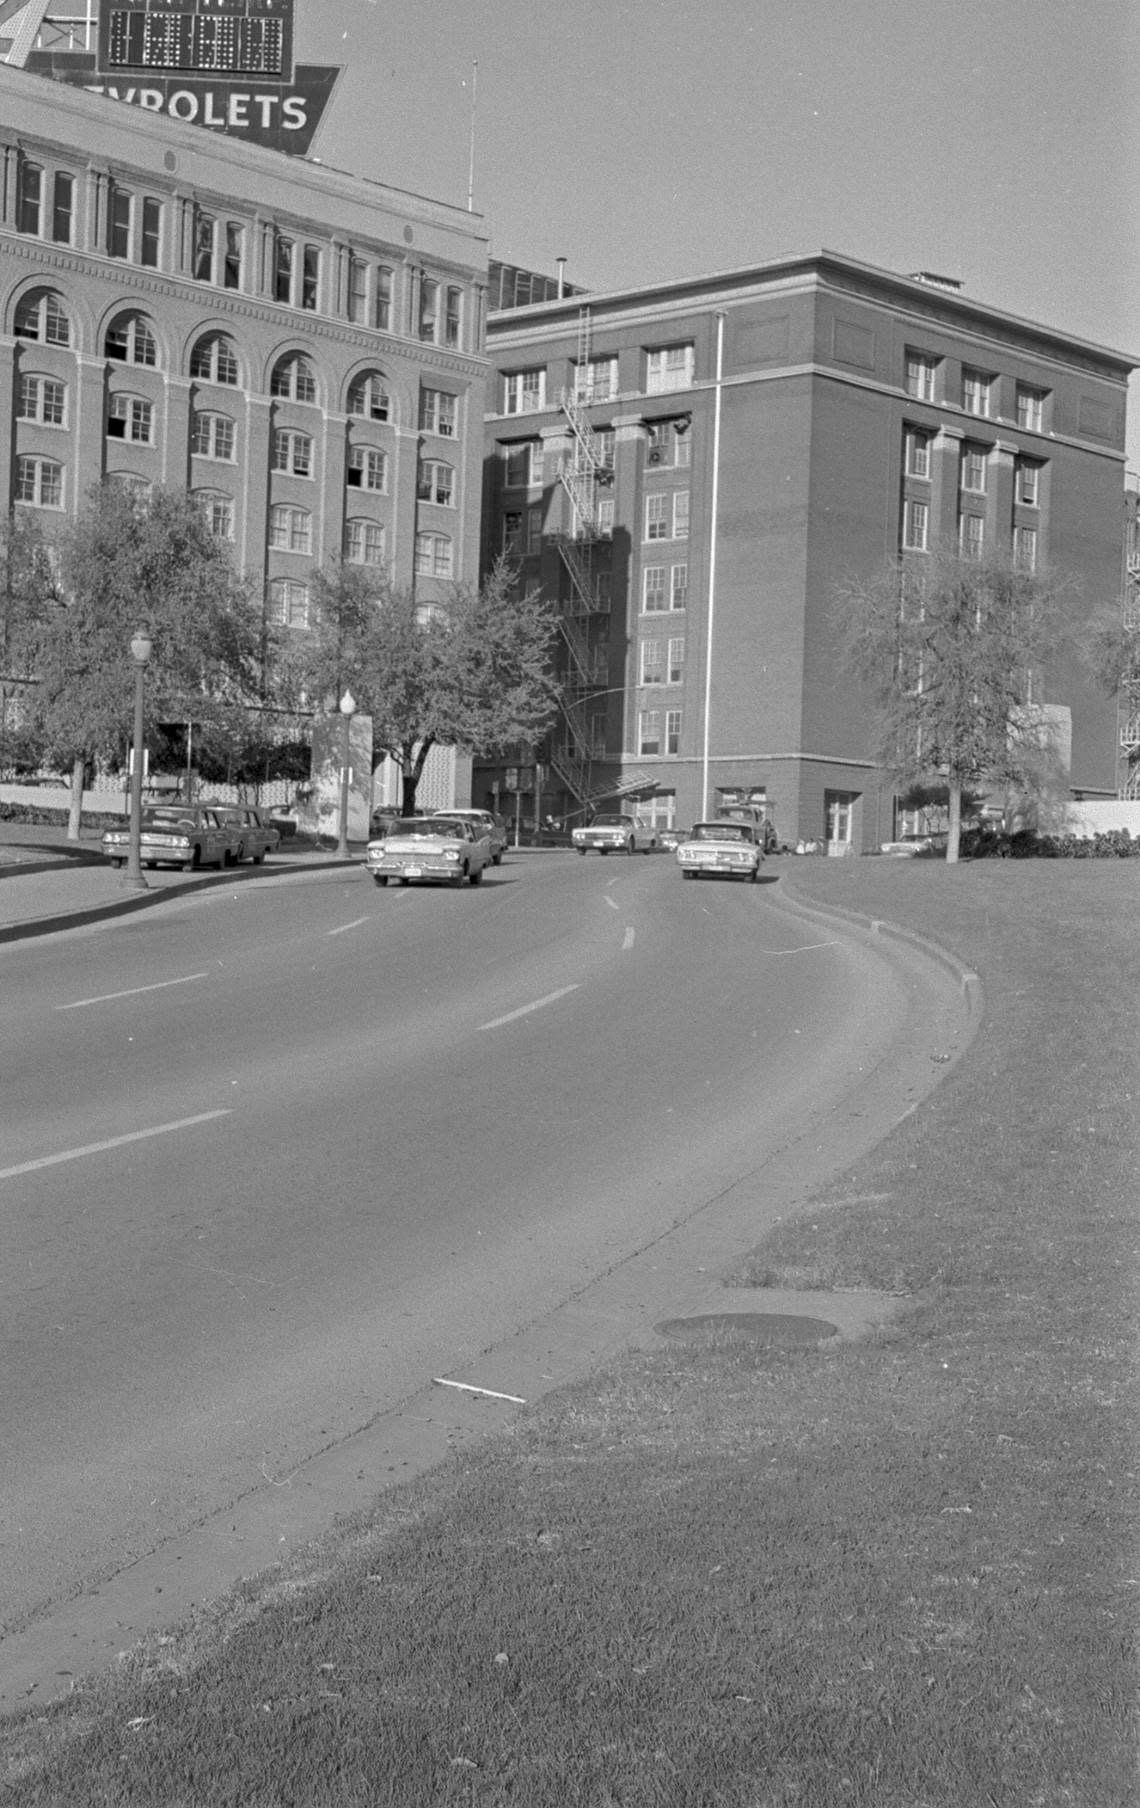 Nov. 22, 1963: Looking toward Texas Book Depository building, Dealey Plaza, during President John F. Kennedy assassination.